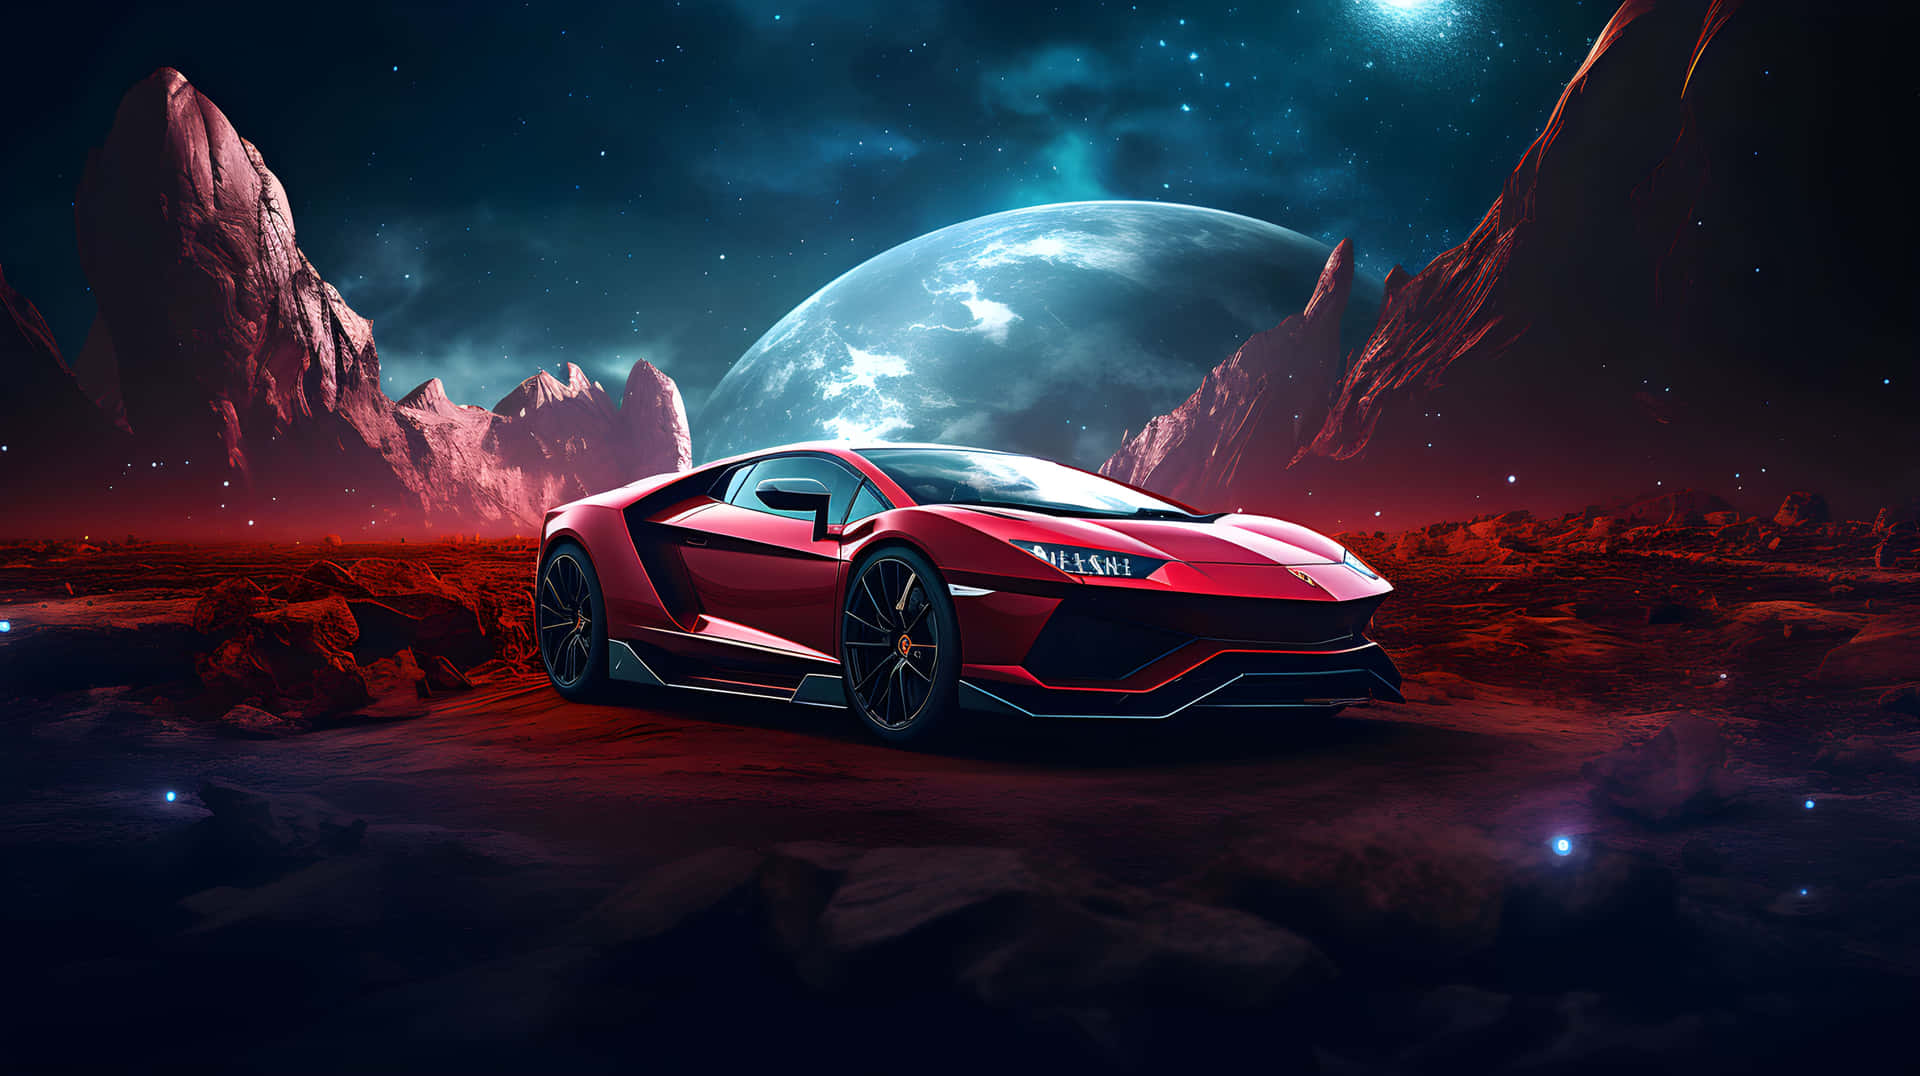 Futuristic Sports Car On Alien Planet P F P Wallpaper